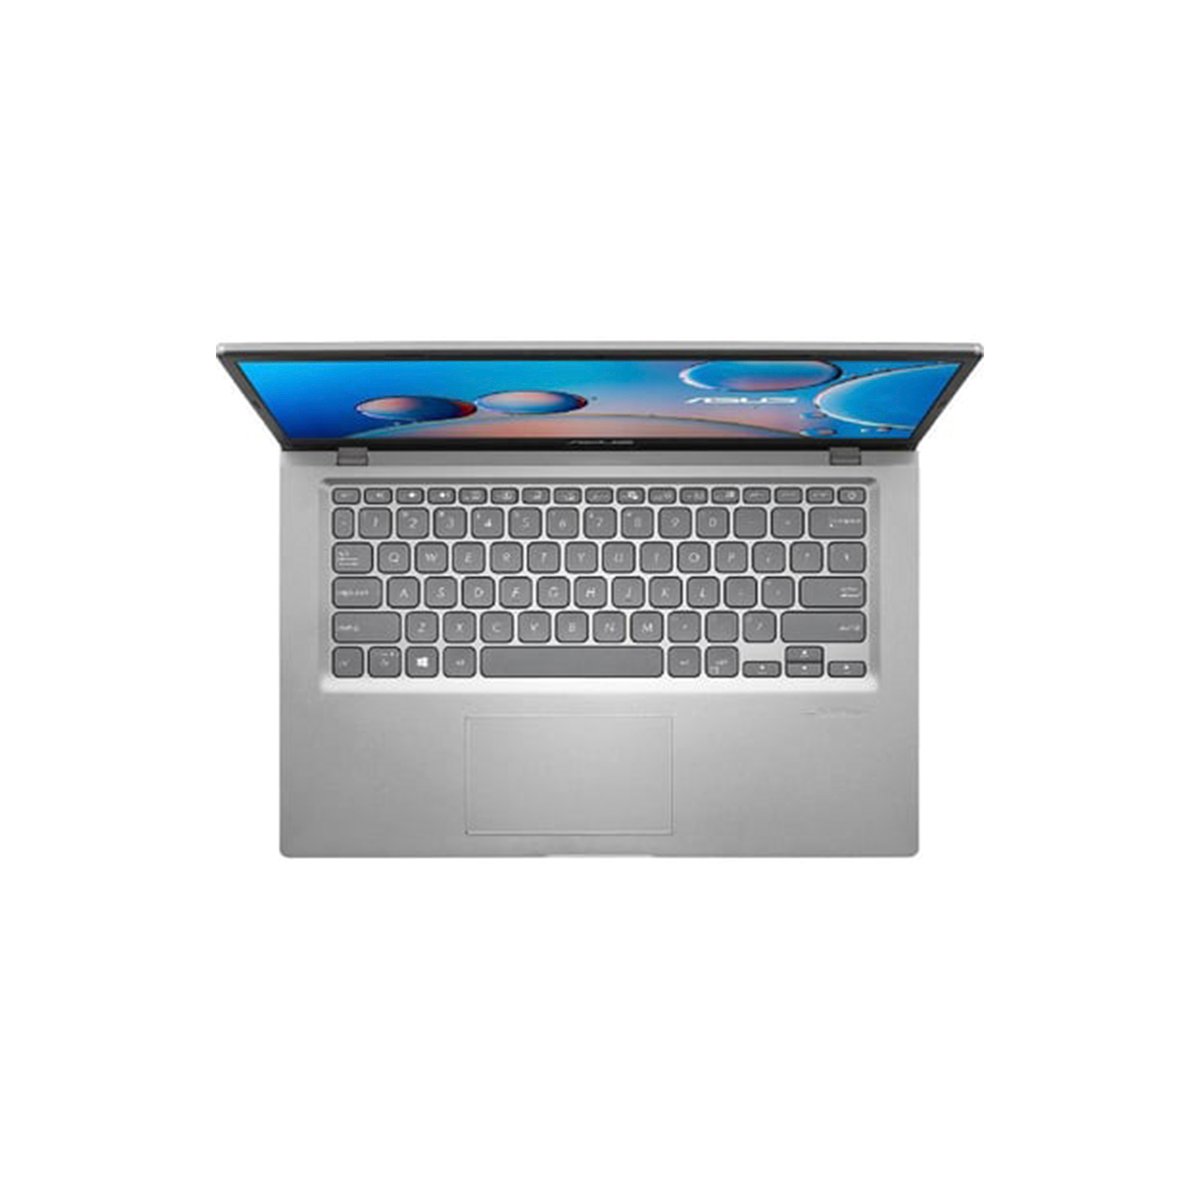 Asus X415 Laptop X415EA-EK101T, 14 inches, 11th Gen Intel Core i5-1135G7, 4GB RAM, 256GB SSD, Intel UHD Graphics, Transparent Silver